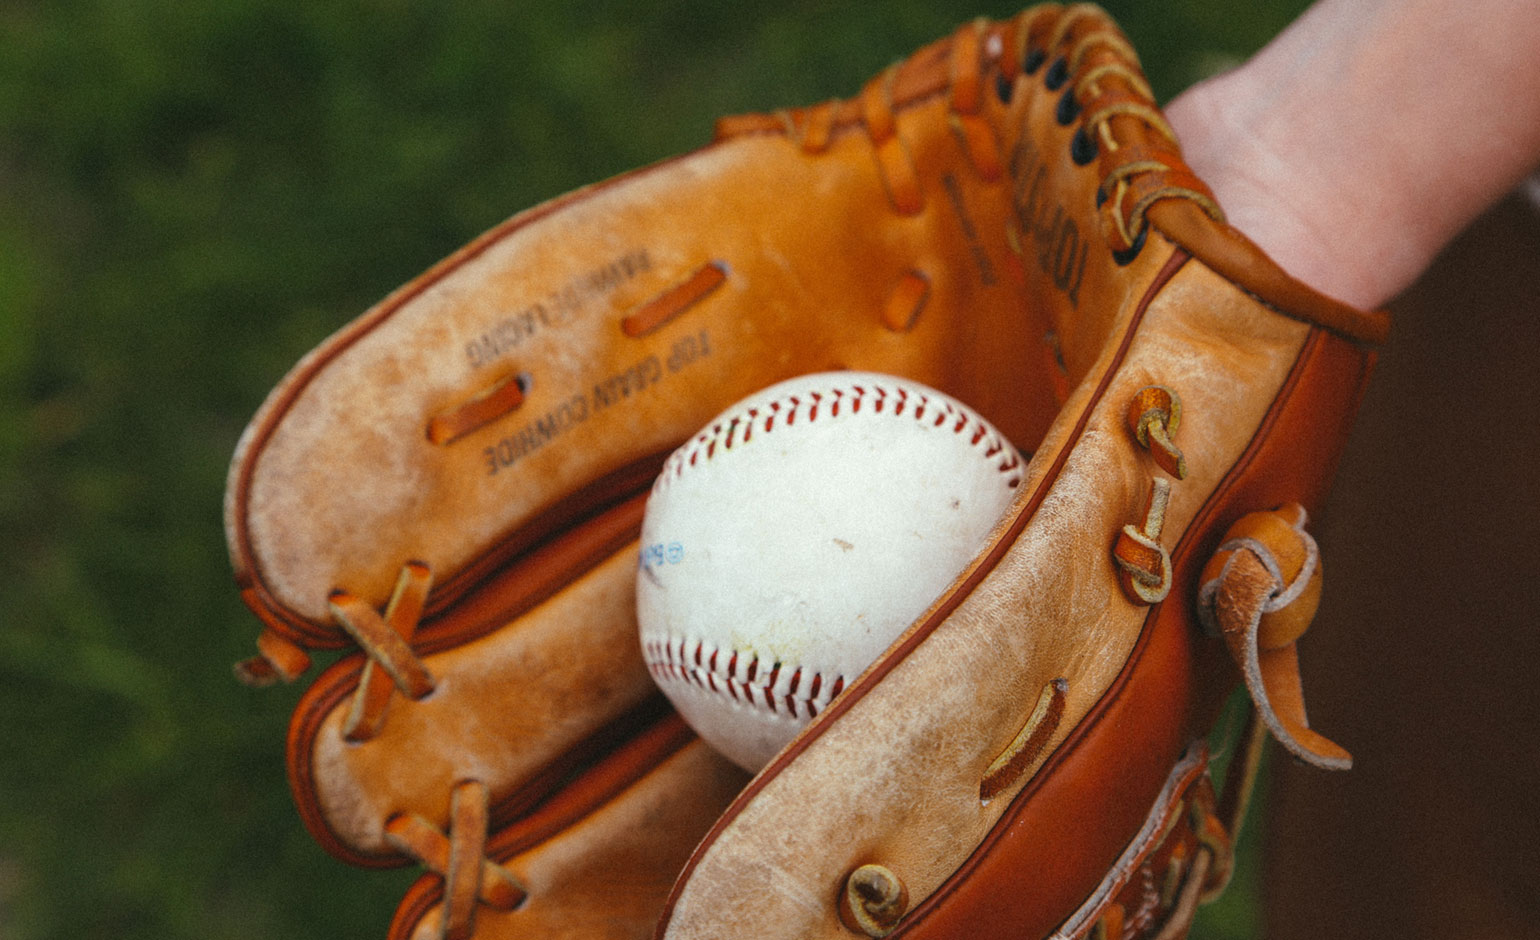 A baseball is shown resting in a baseball glove.